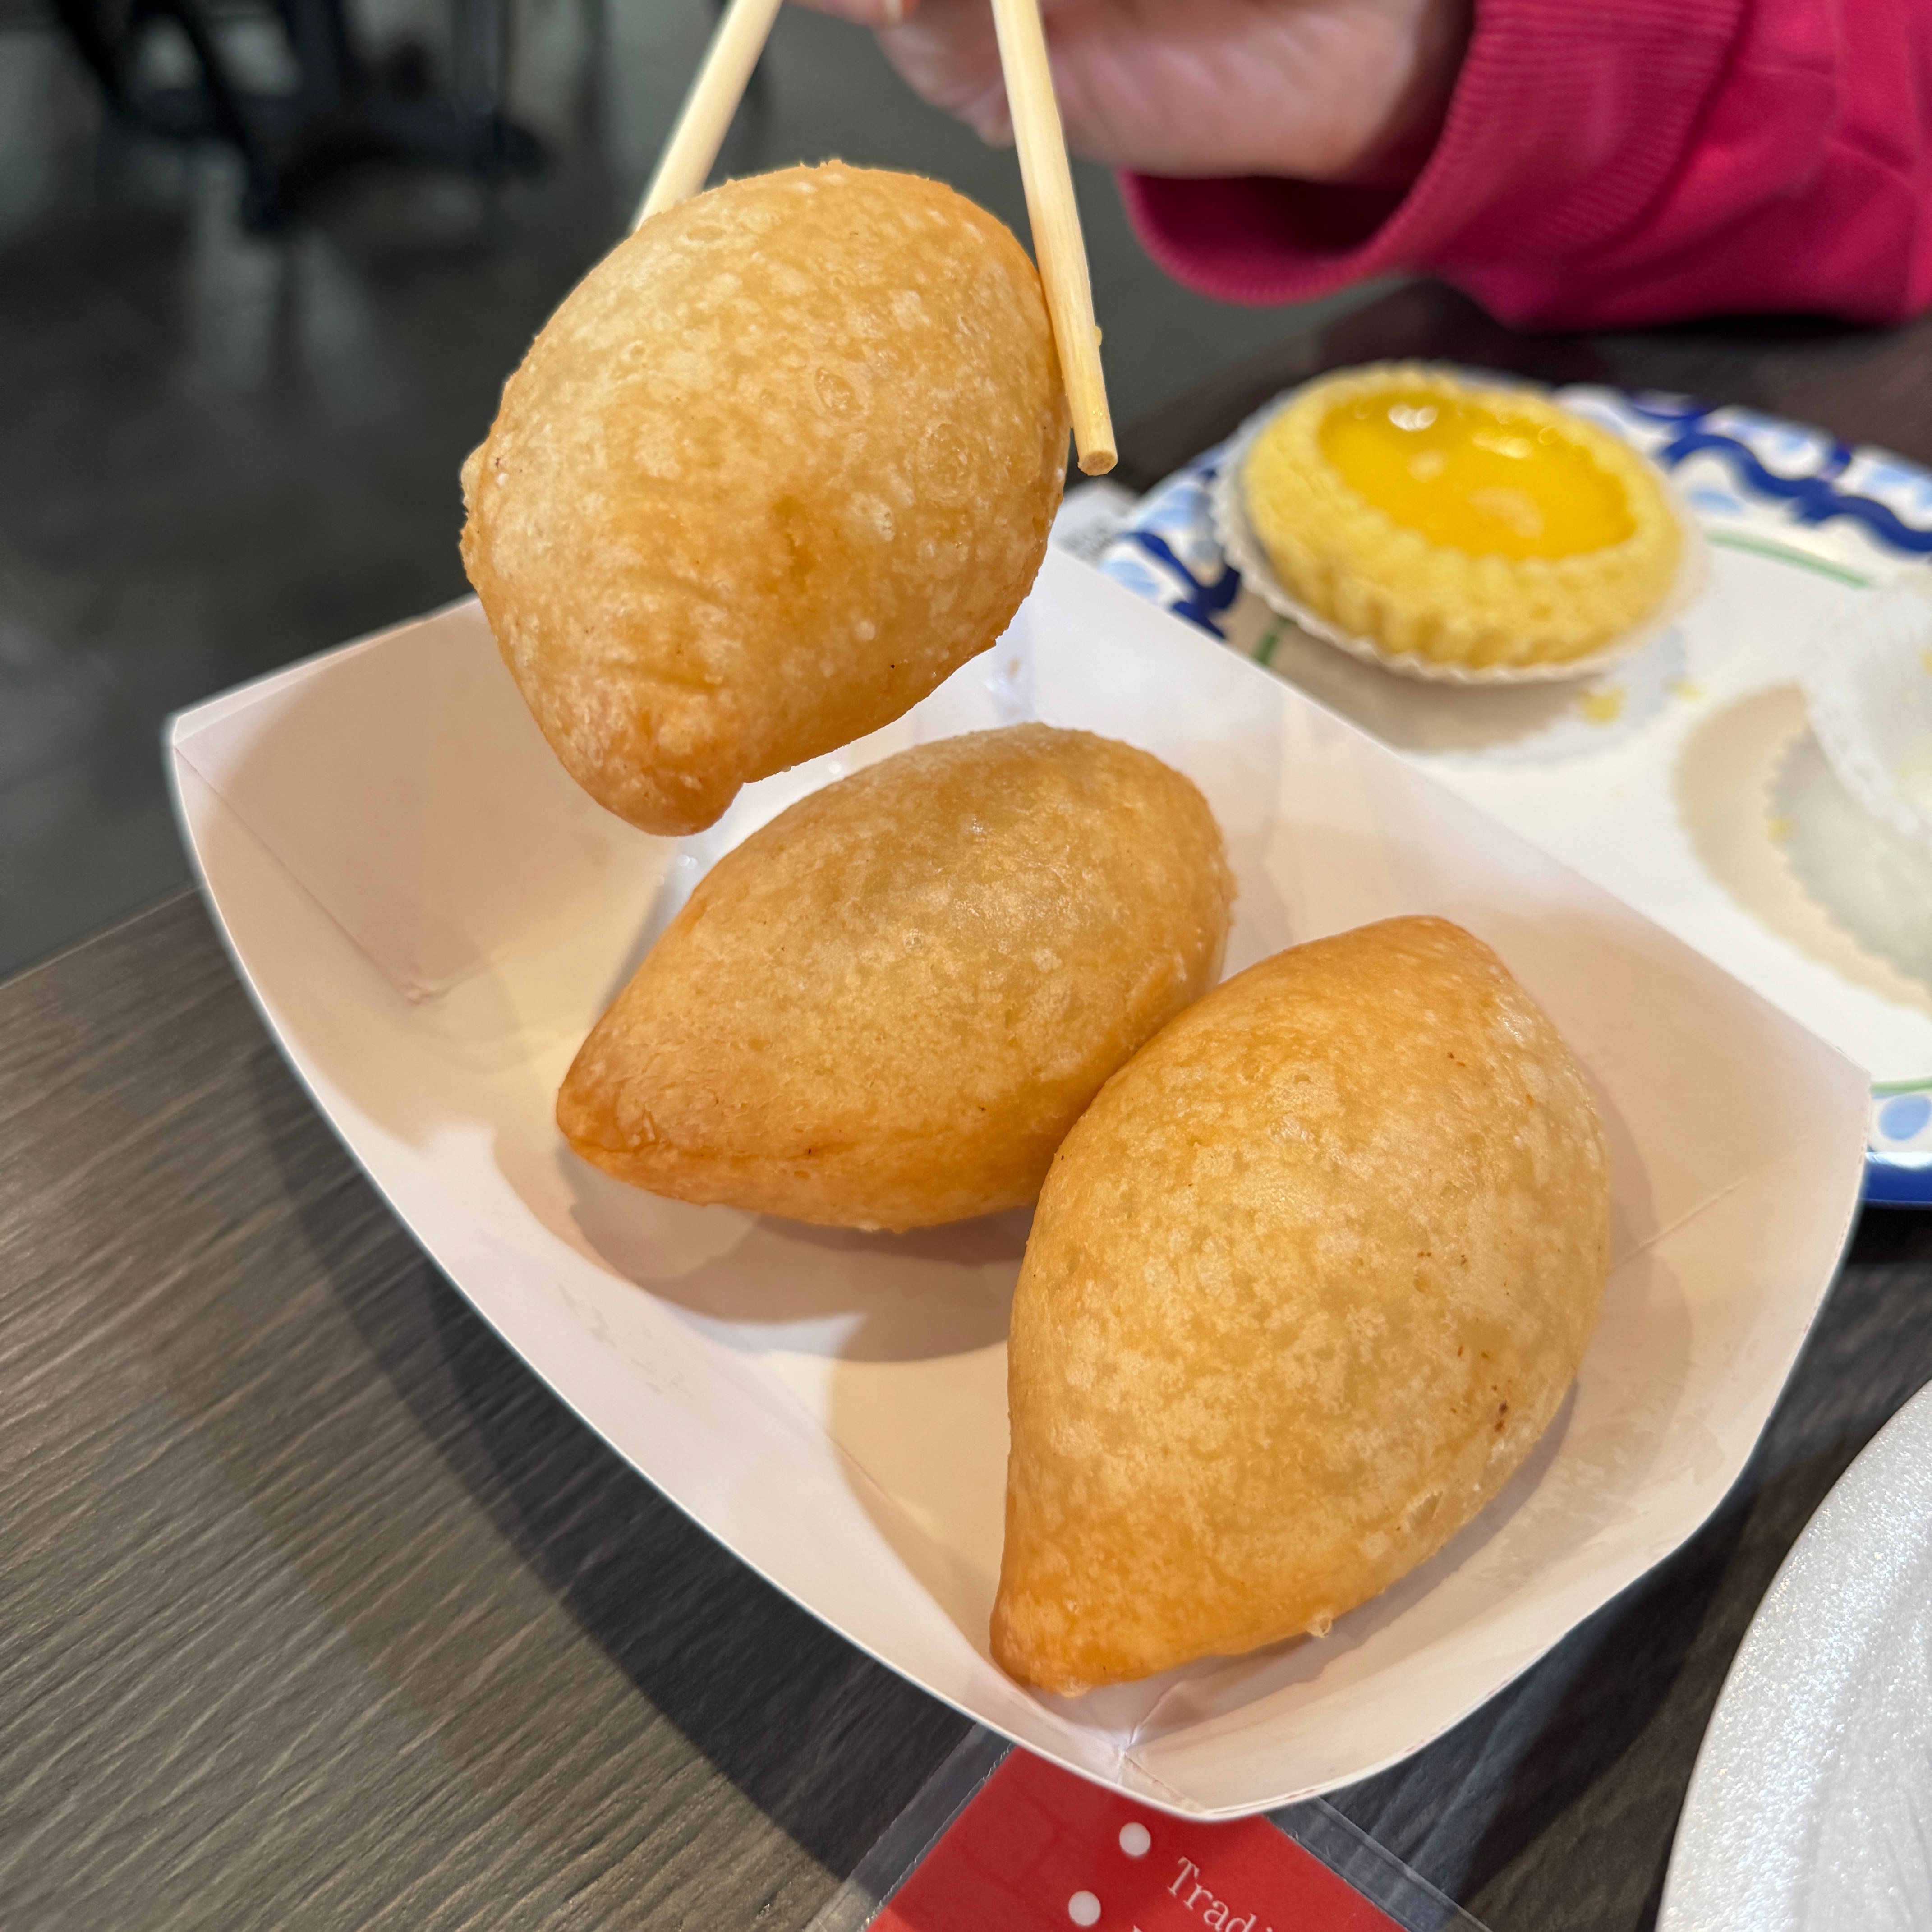 Deep Fried Meat Dumpling $6.55 from Kingdom Dim Sum on #foodmento http://foodmento.com/dish/57676